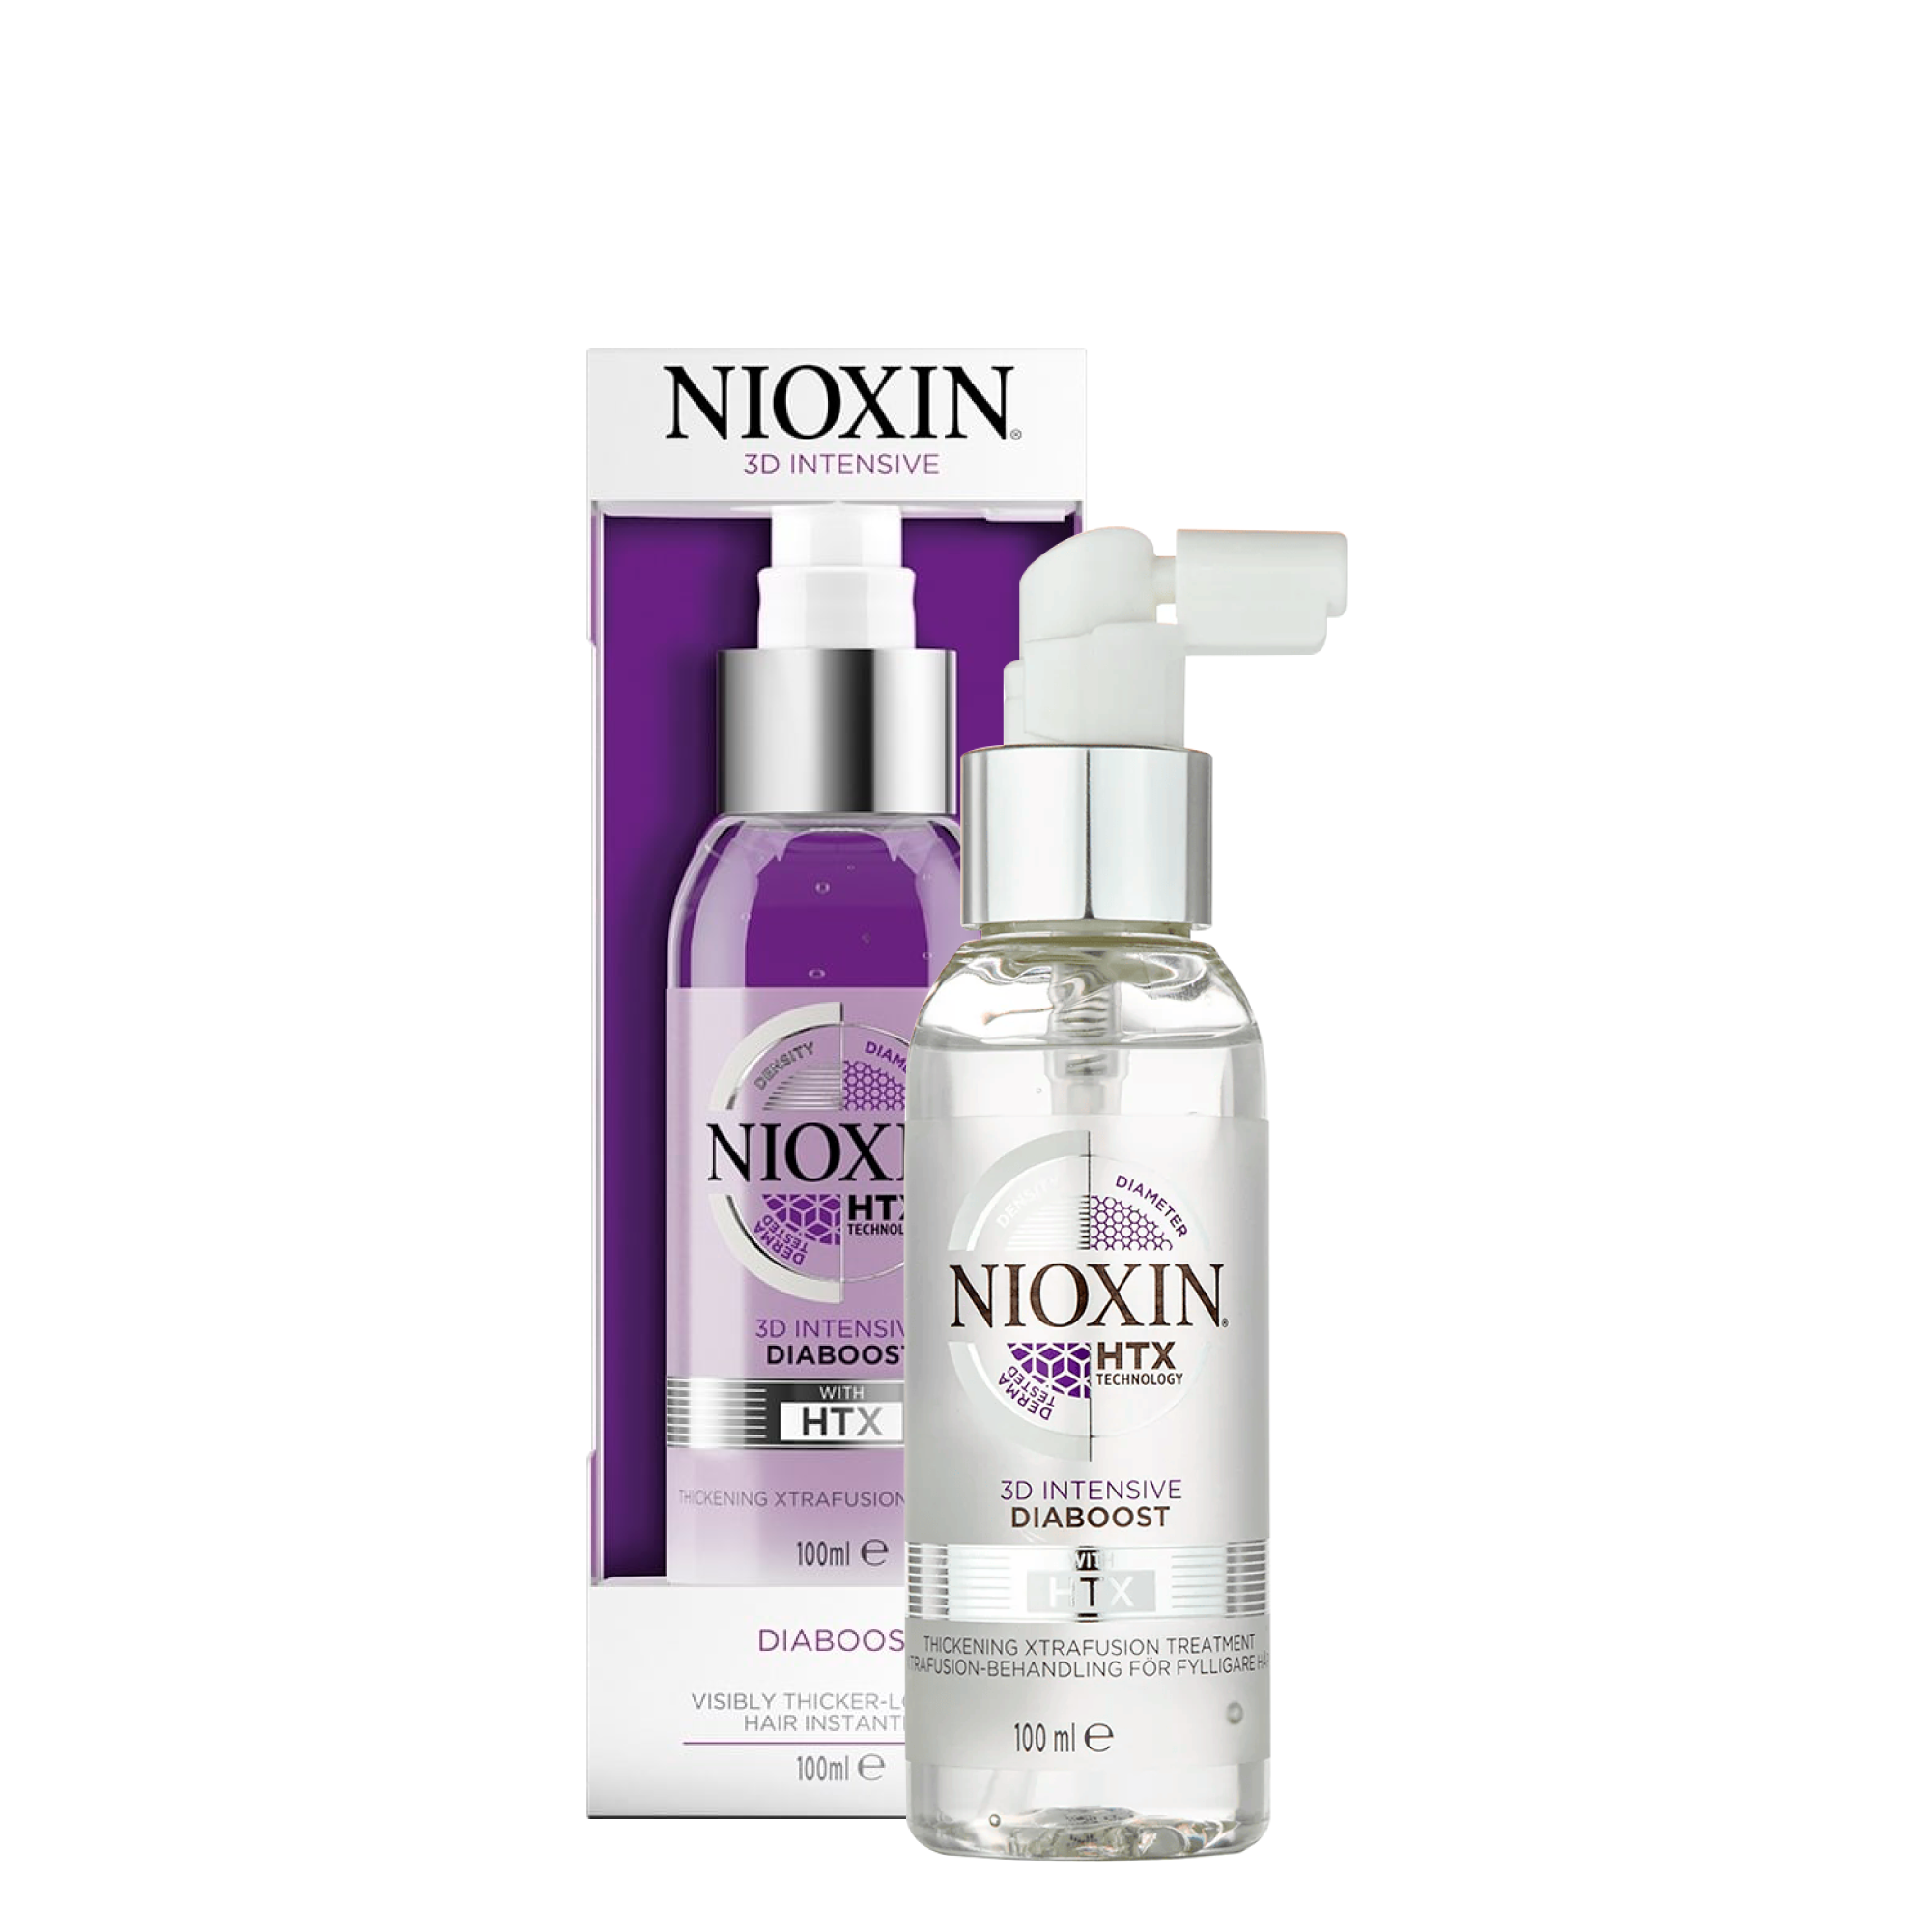 Nioxin Intensive Diaboost 100ml Nioxin